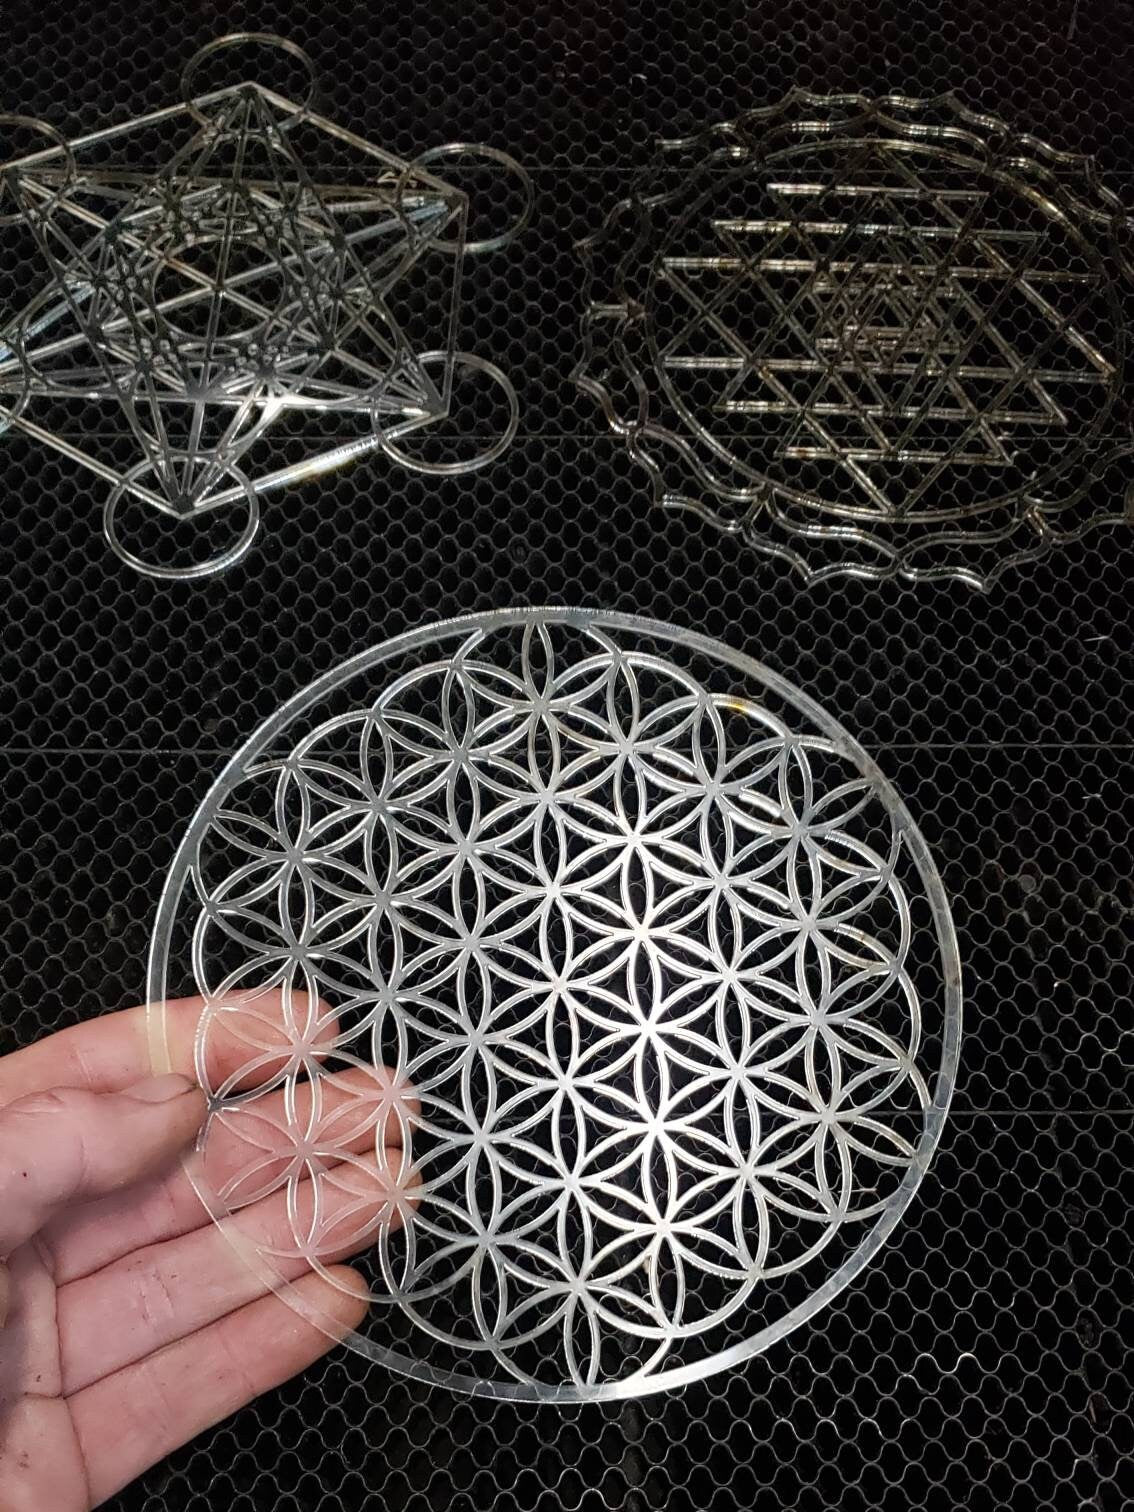 Mini Sacred Geometry Drafting Template in Lasercut Acrylic - Choice of Flower of Life, Metatron's Cube, or Sri Yantra - Rigid Stencil